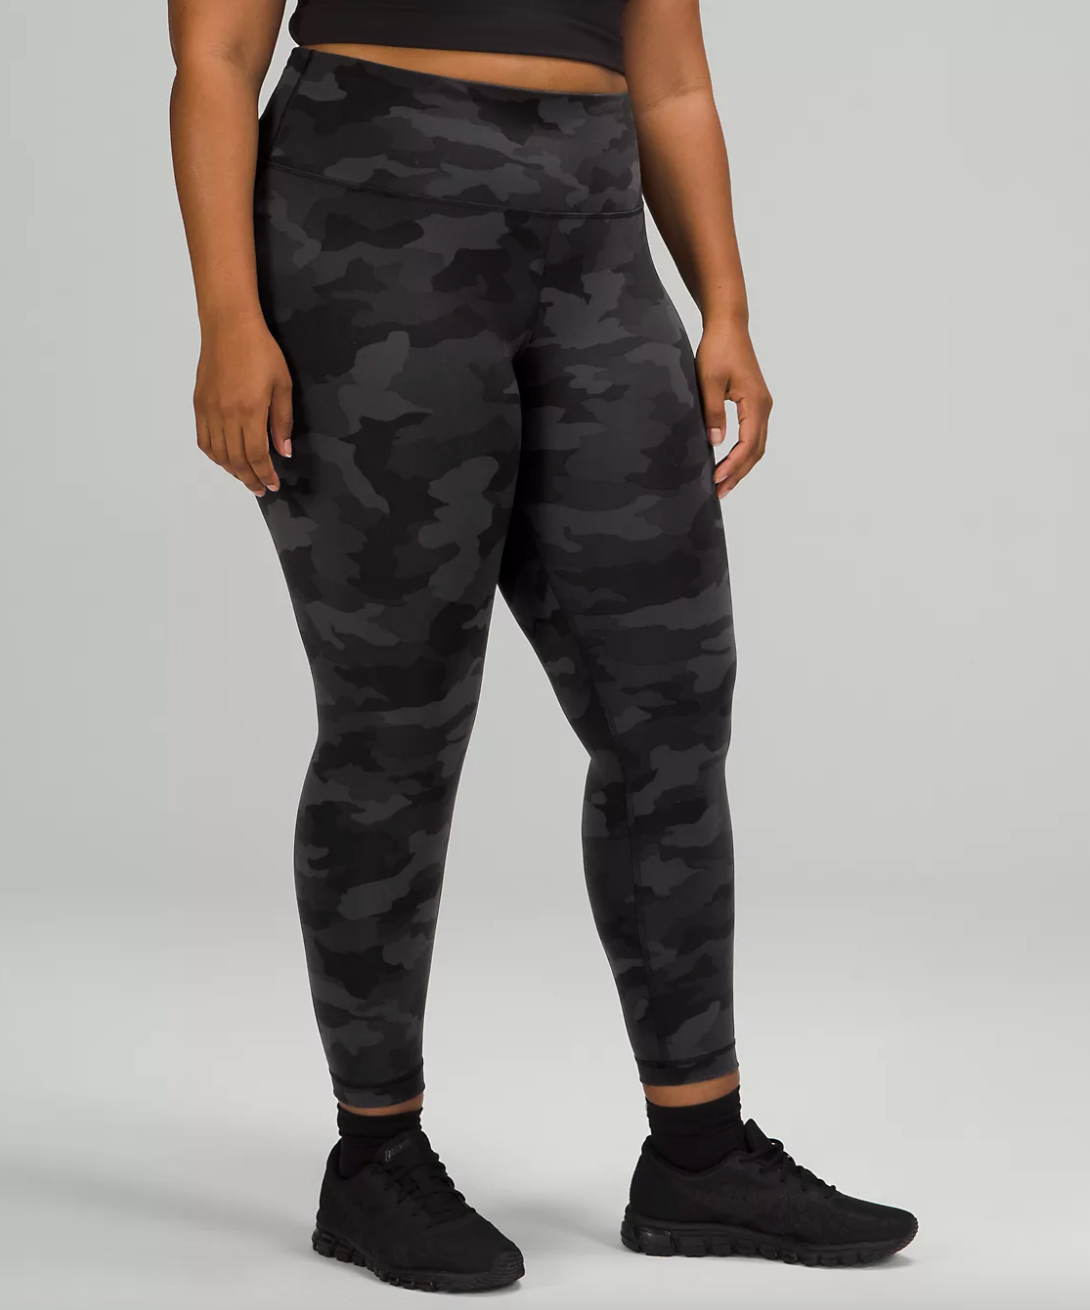 model wearing the full-length leggings in black and grey camo print